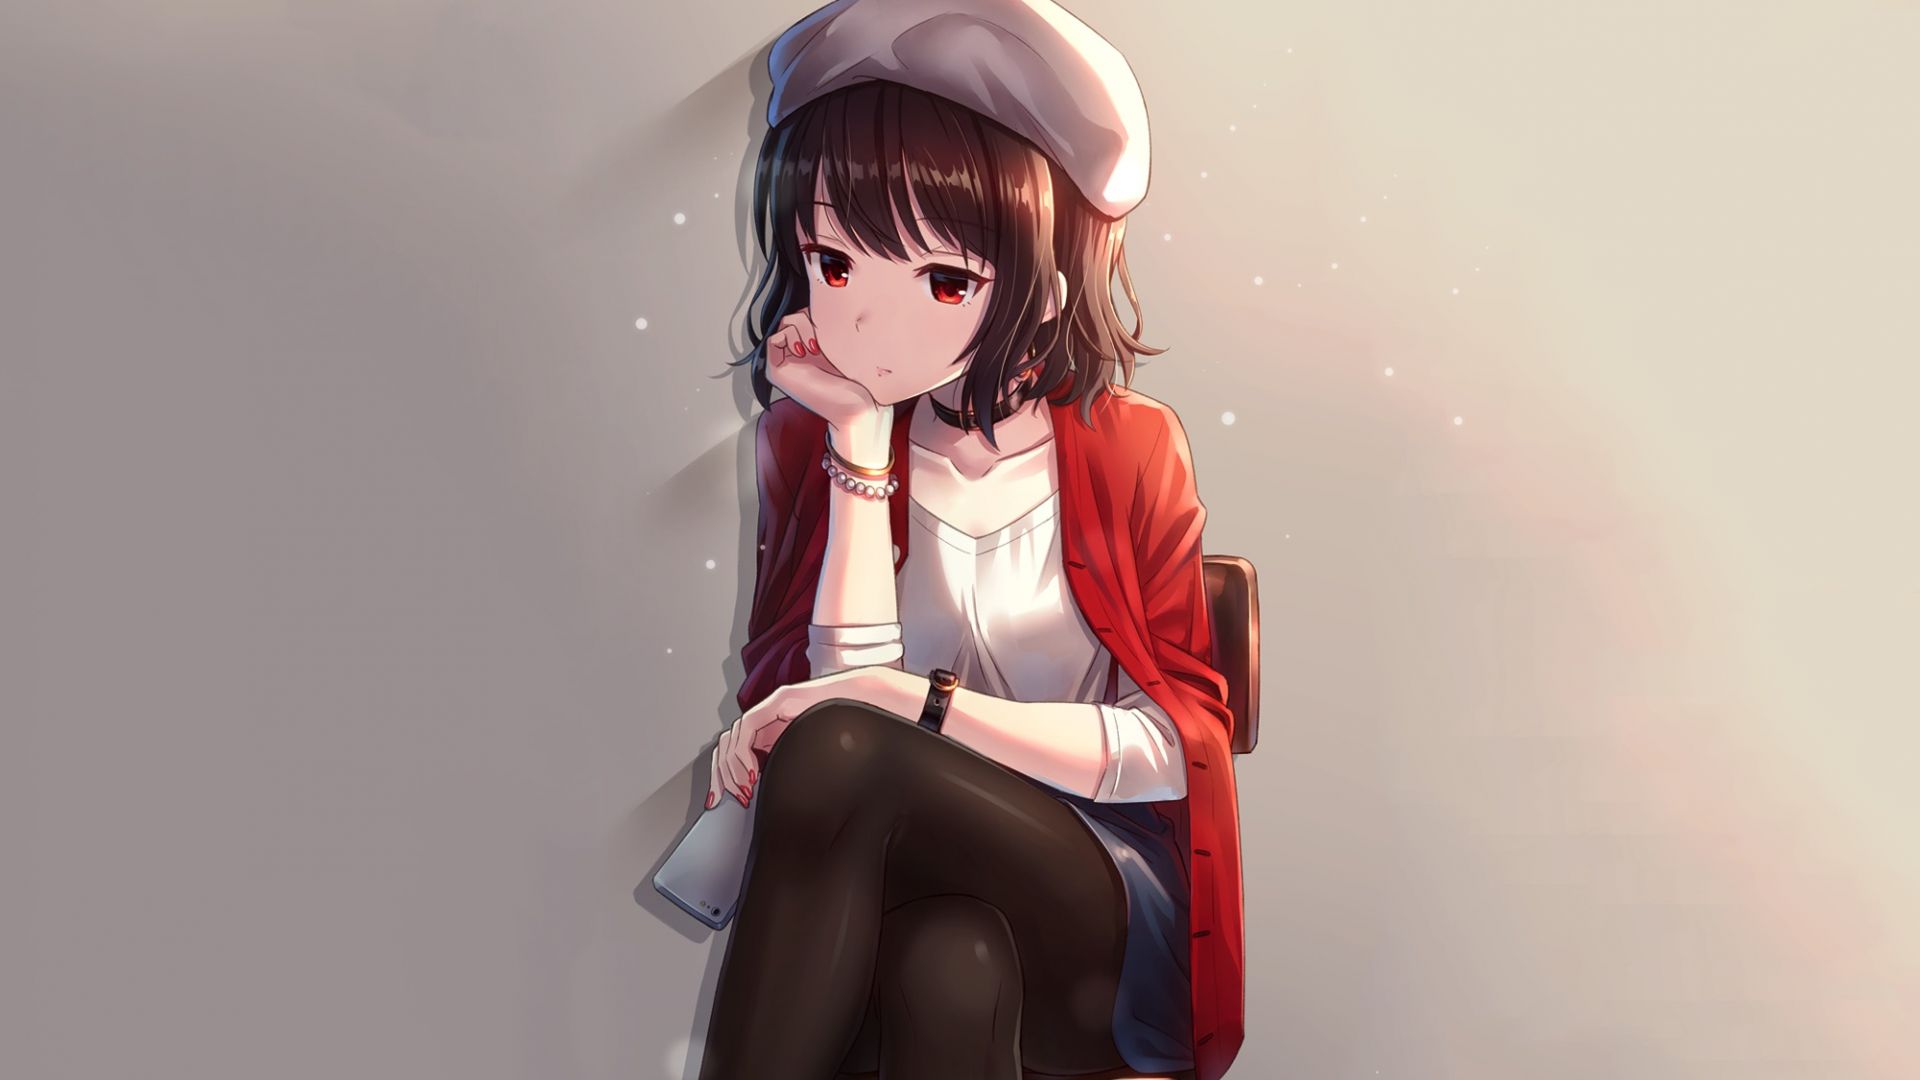 Wallpaper Red eyes, cute anime girl, sitting, original